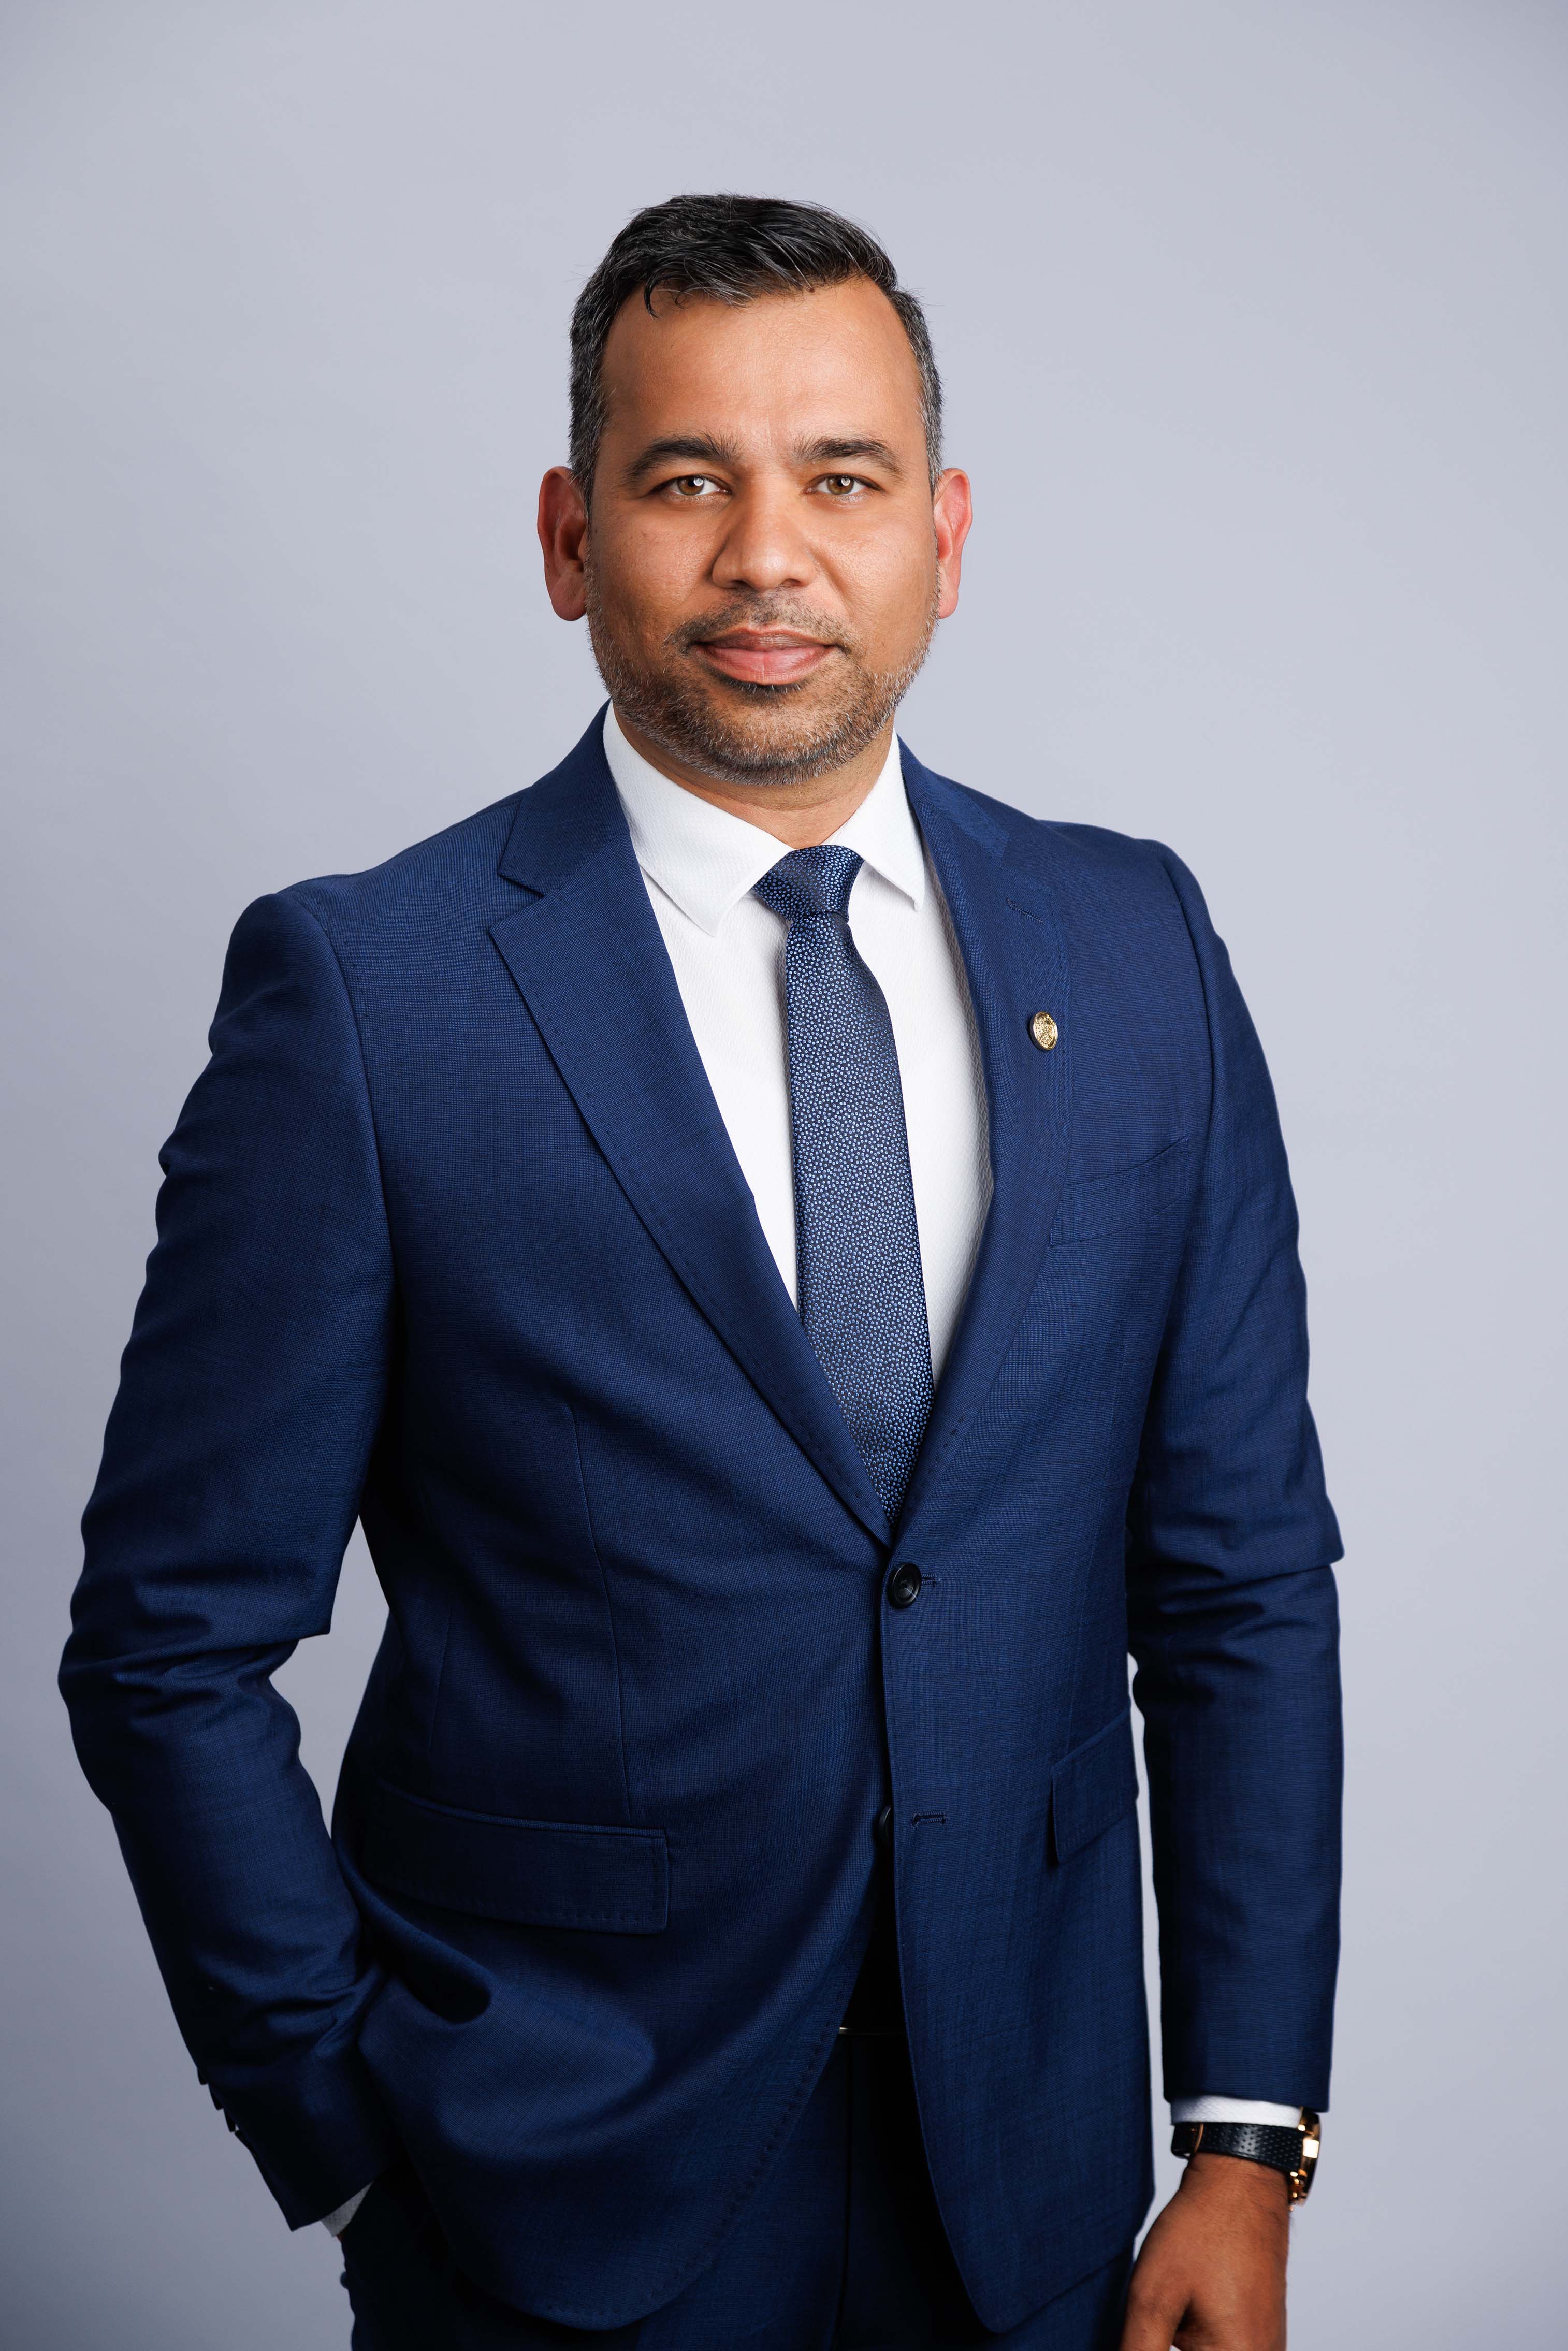 City of Parramatta Deputy Lord Mayor Councillor Sameer Pandey